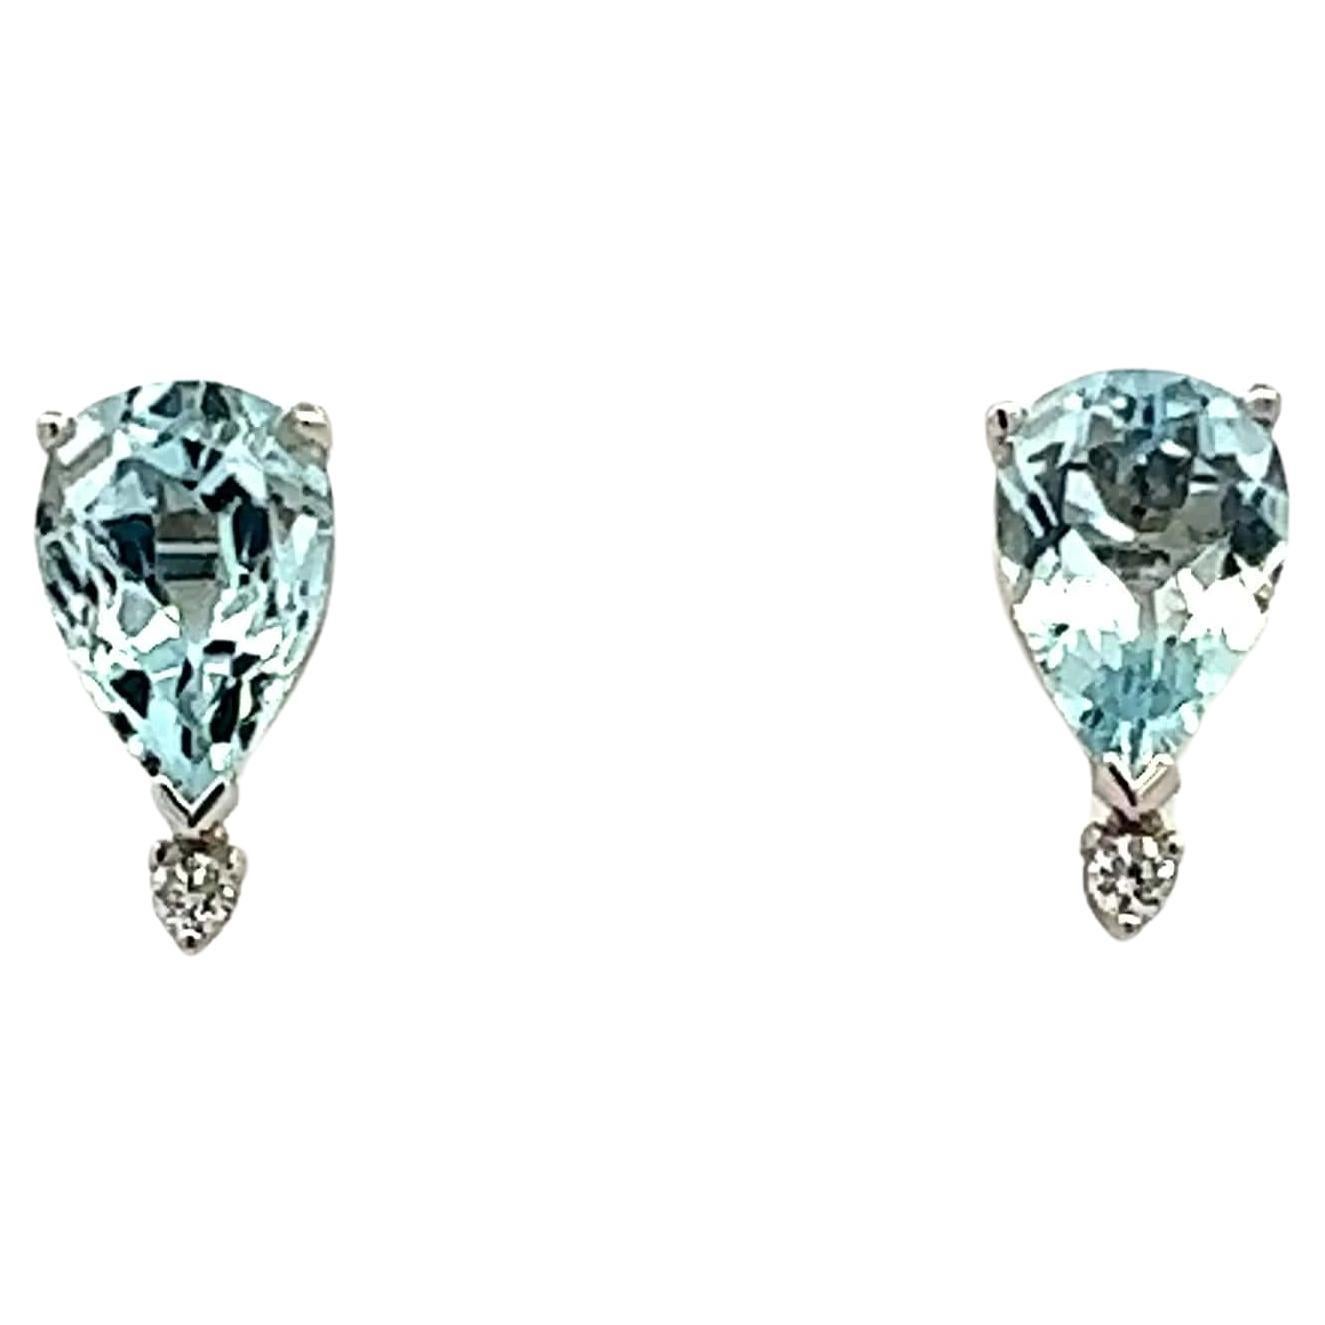 Natural Aquamarine Diamond Earrings 14k W Gold 3.35 TCW Certified 